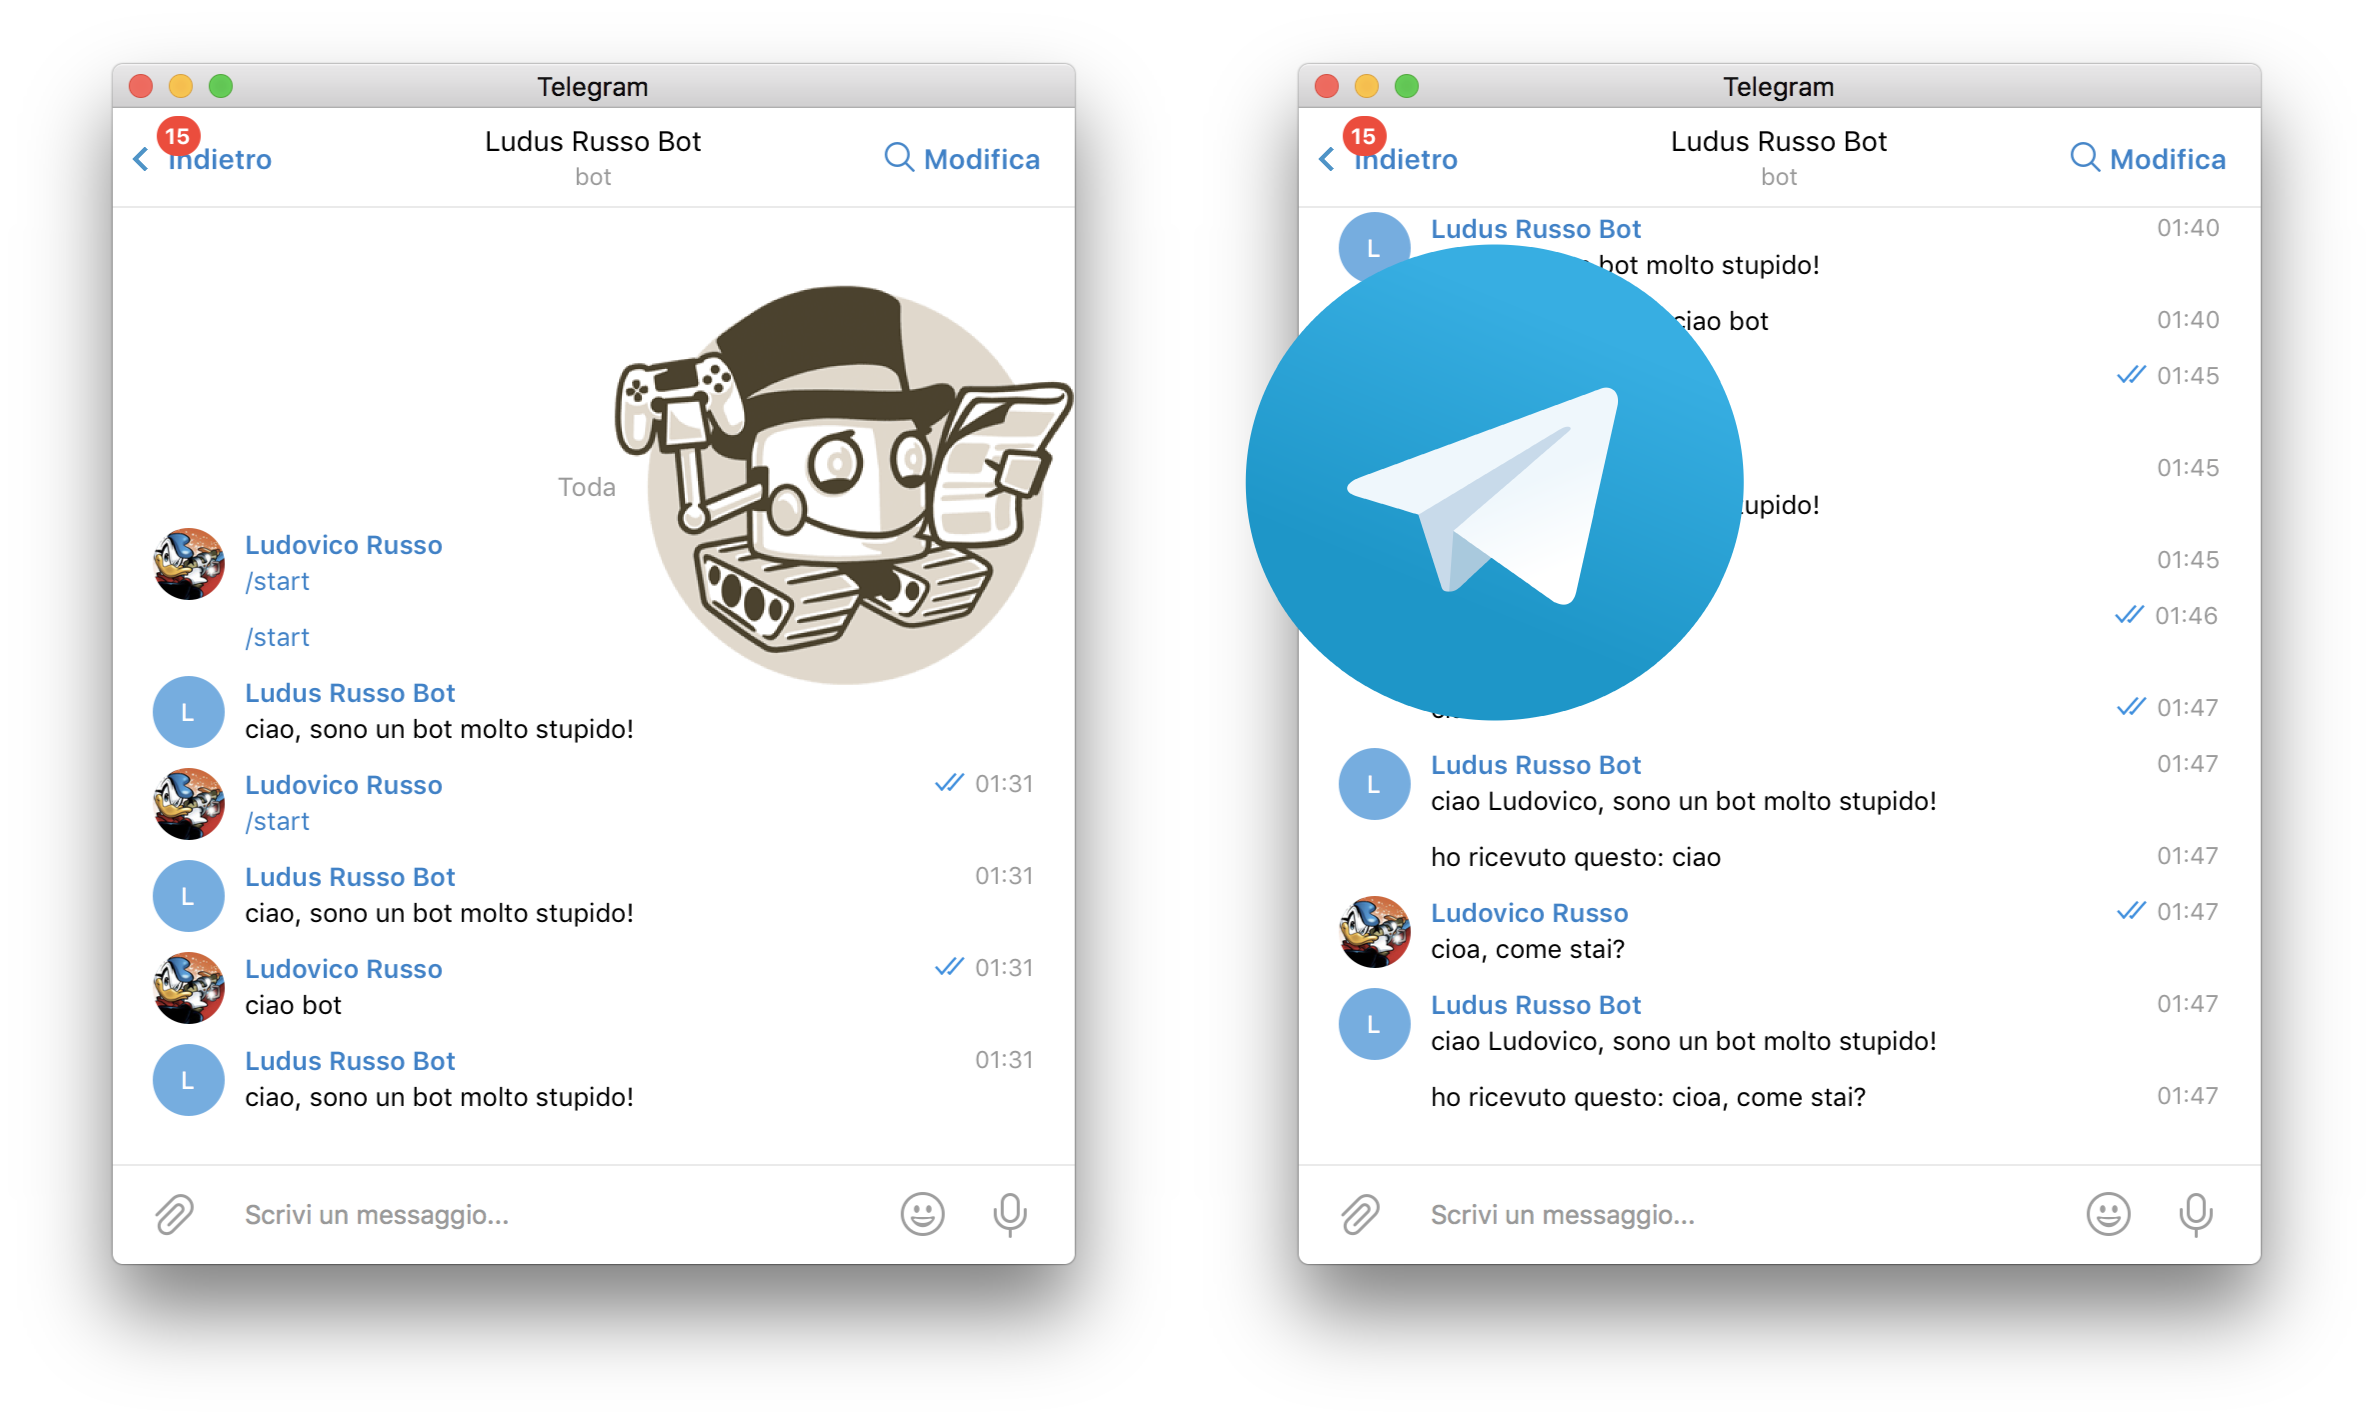 ChatBot telegram in azione